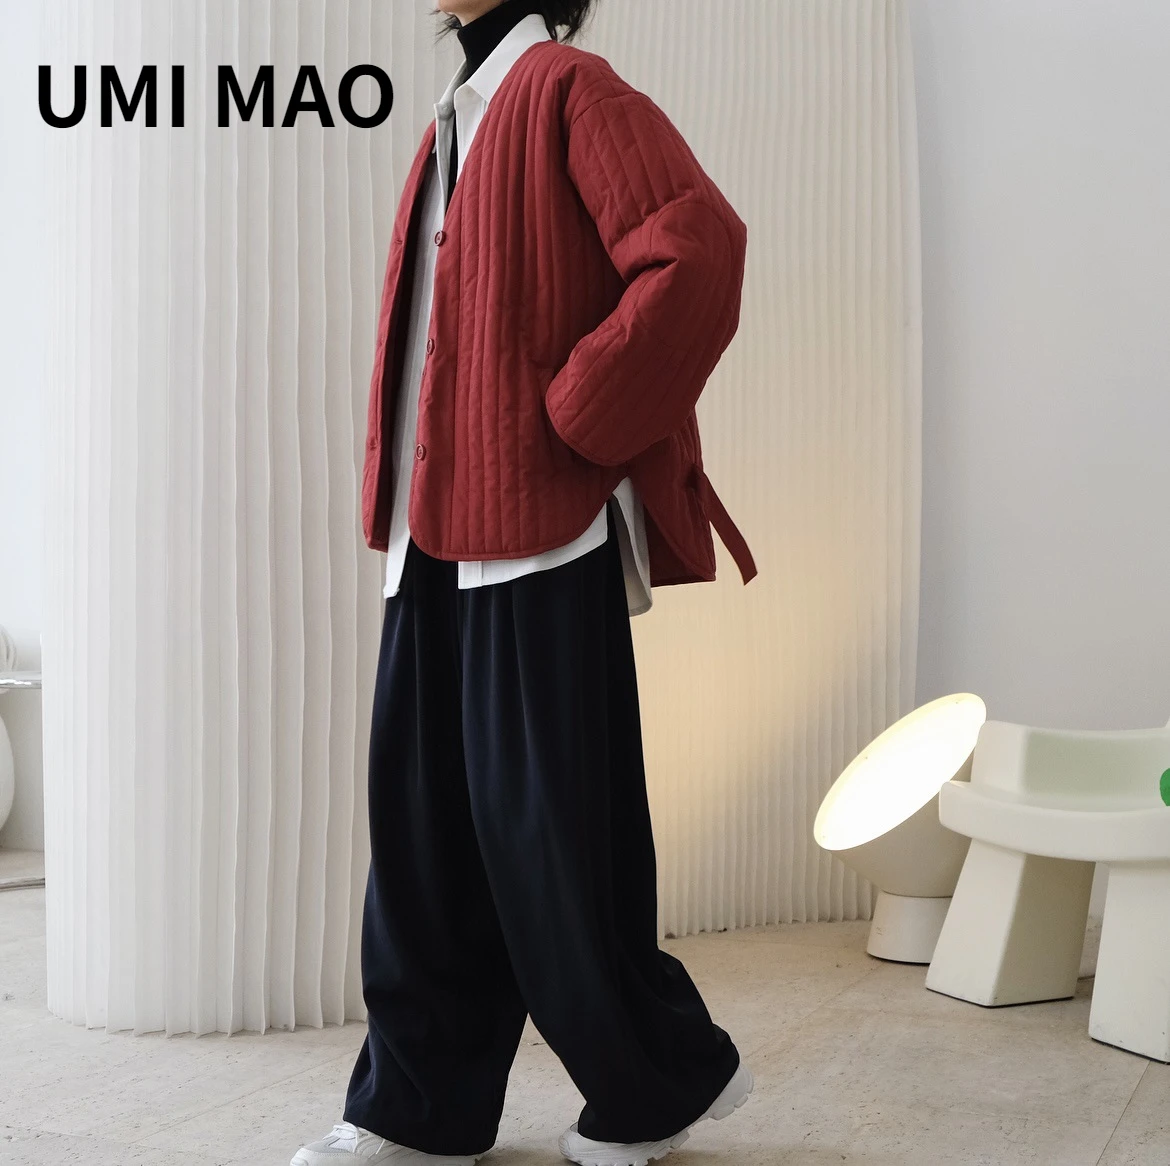 

UMI MAO Autumn Winter New Korean Ins Simple Slouchy Warm Design V-Neck Silhouette Cotton Shirt Loose Slim Coat Women's Thick